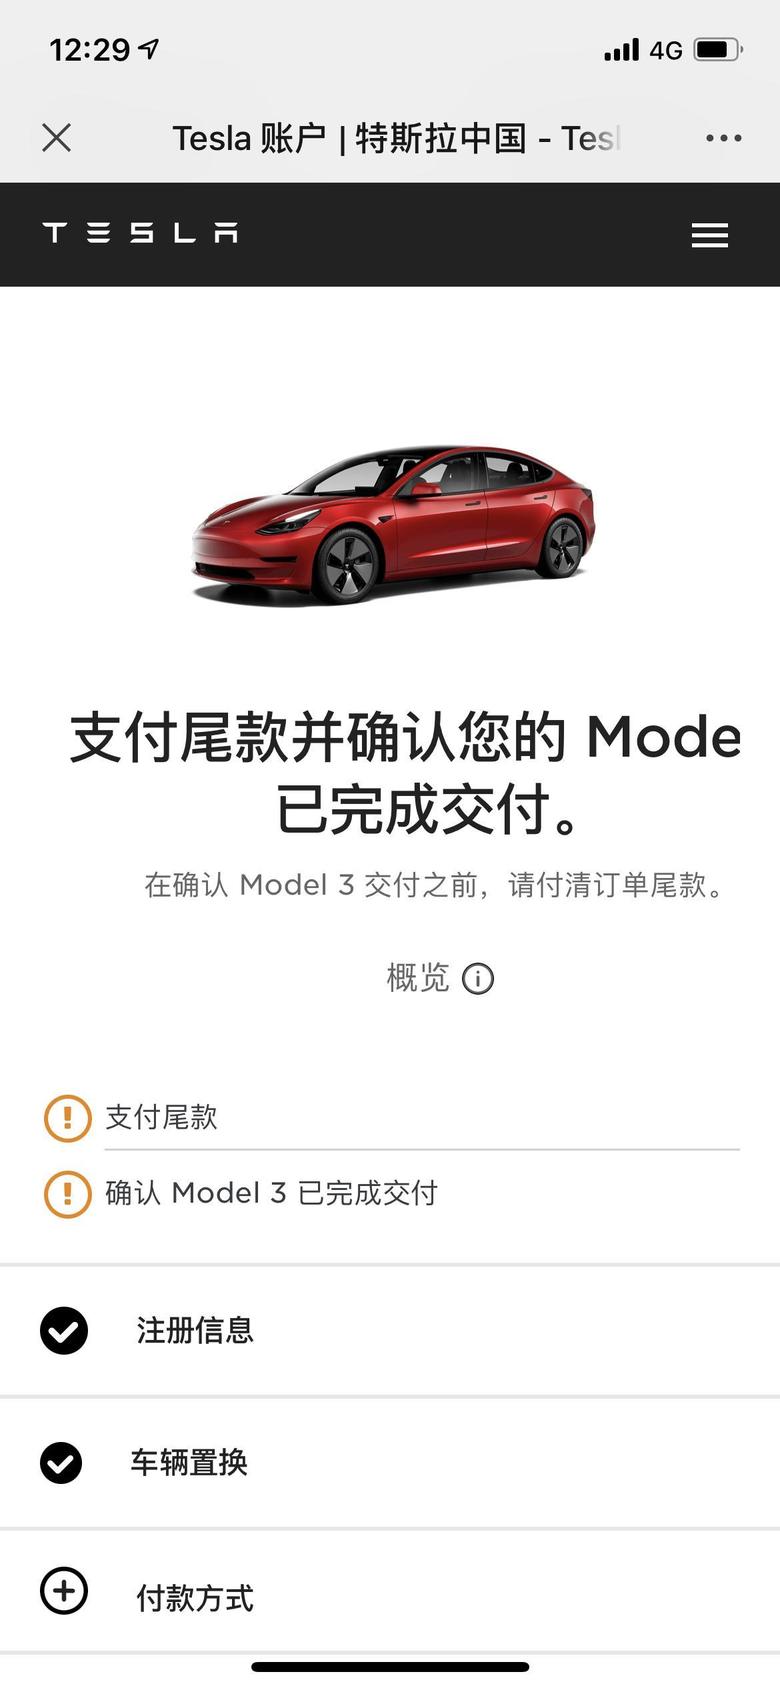 model 3 广州18号订单，周末安排提车